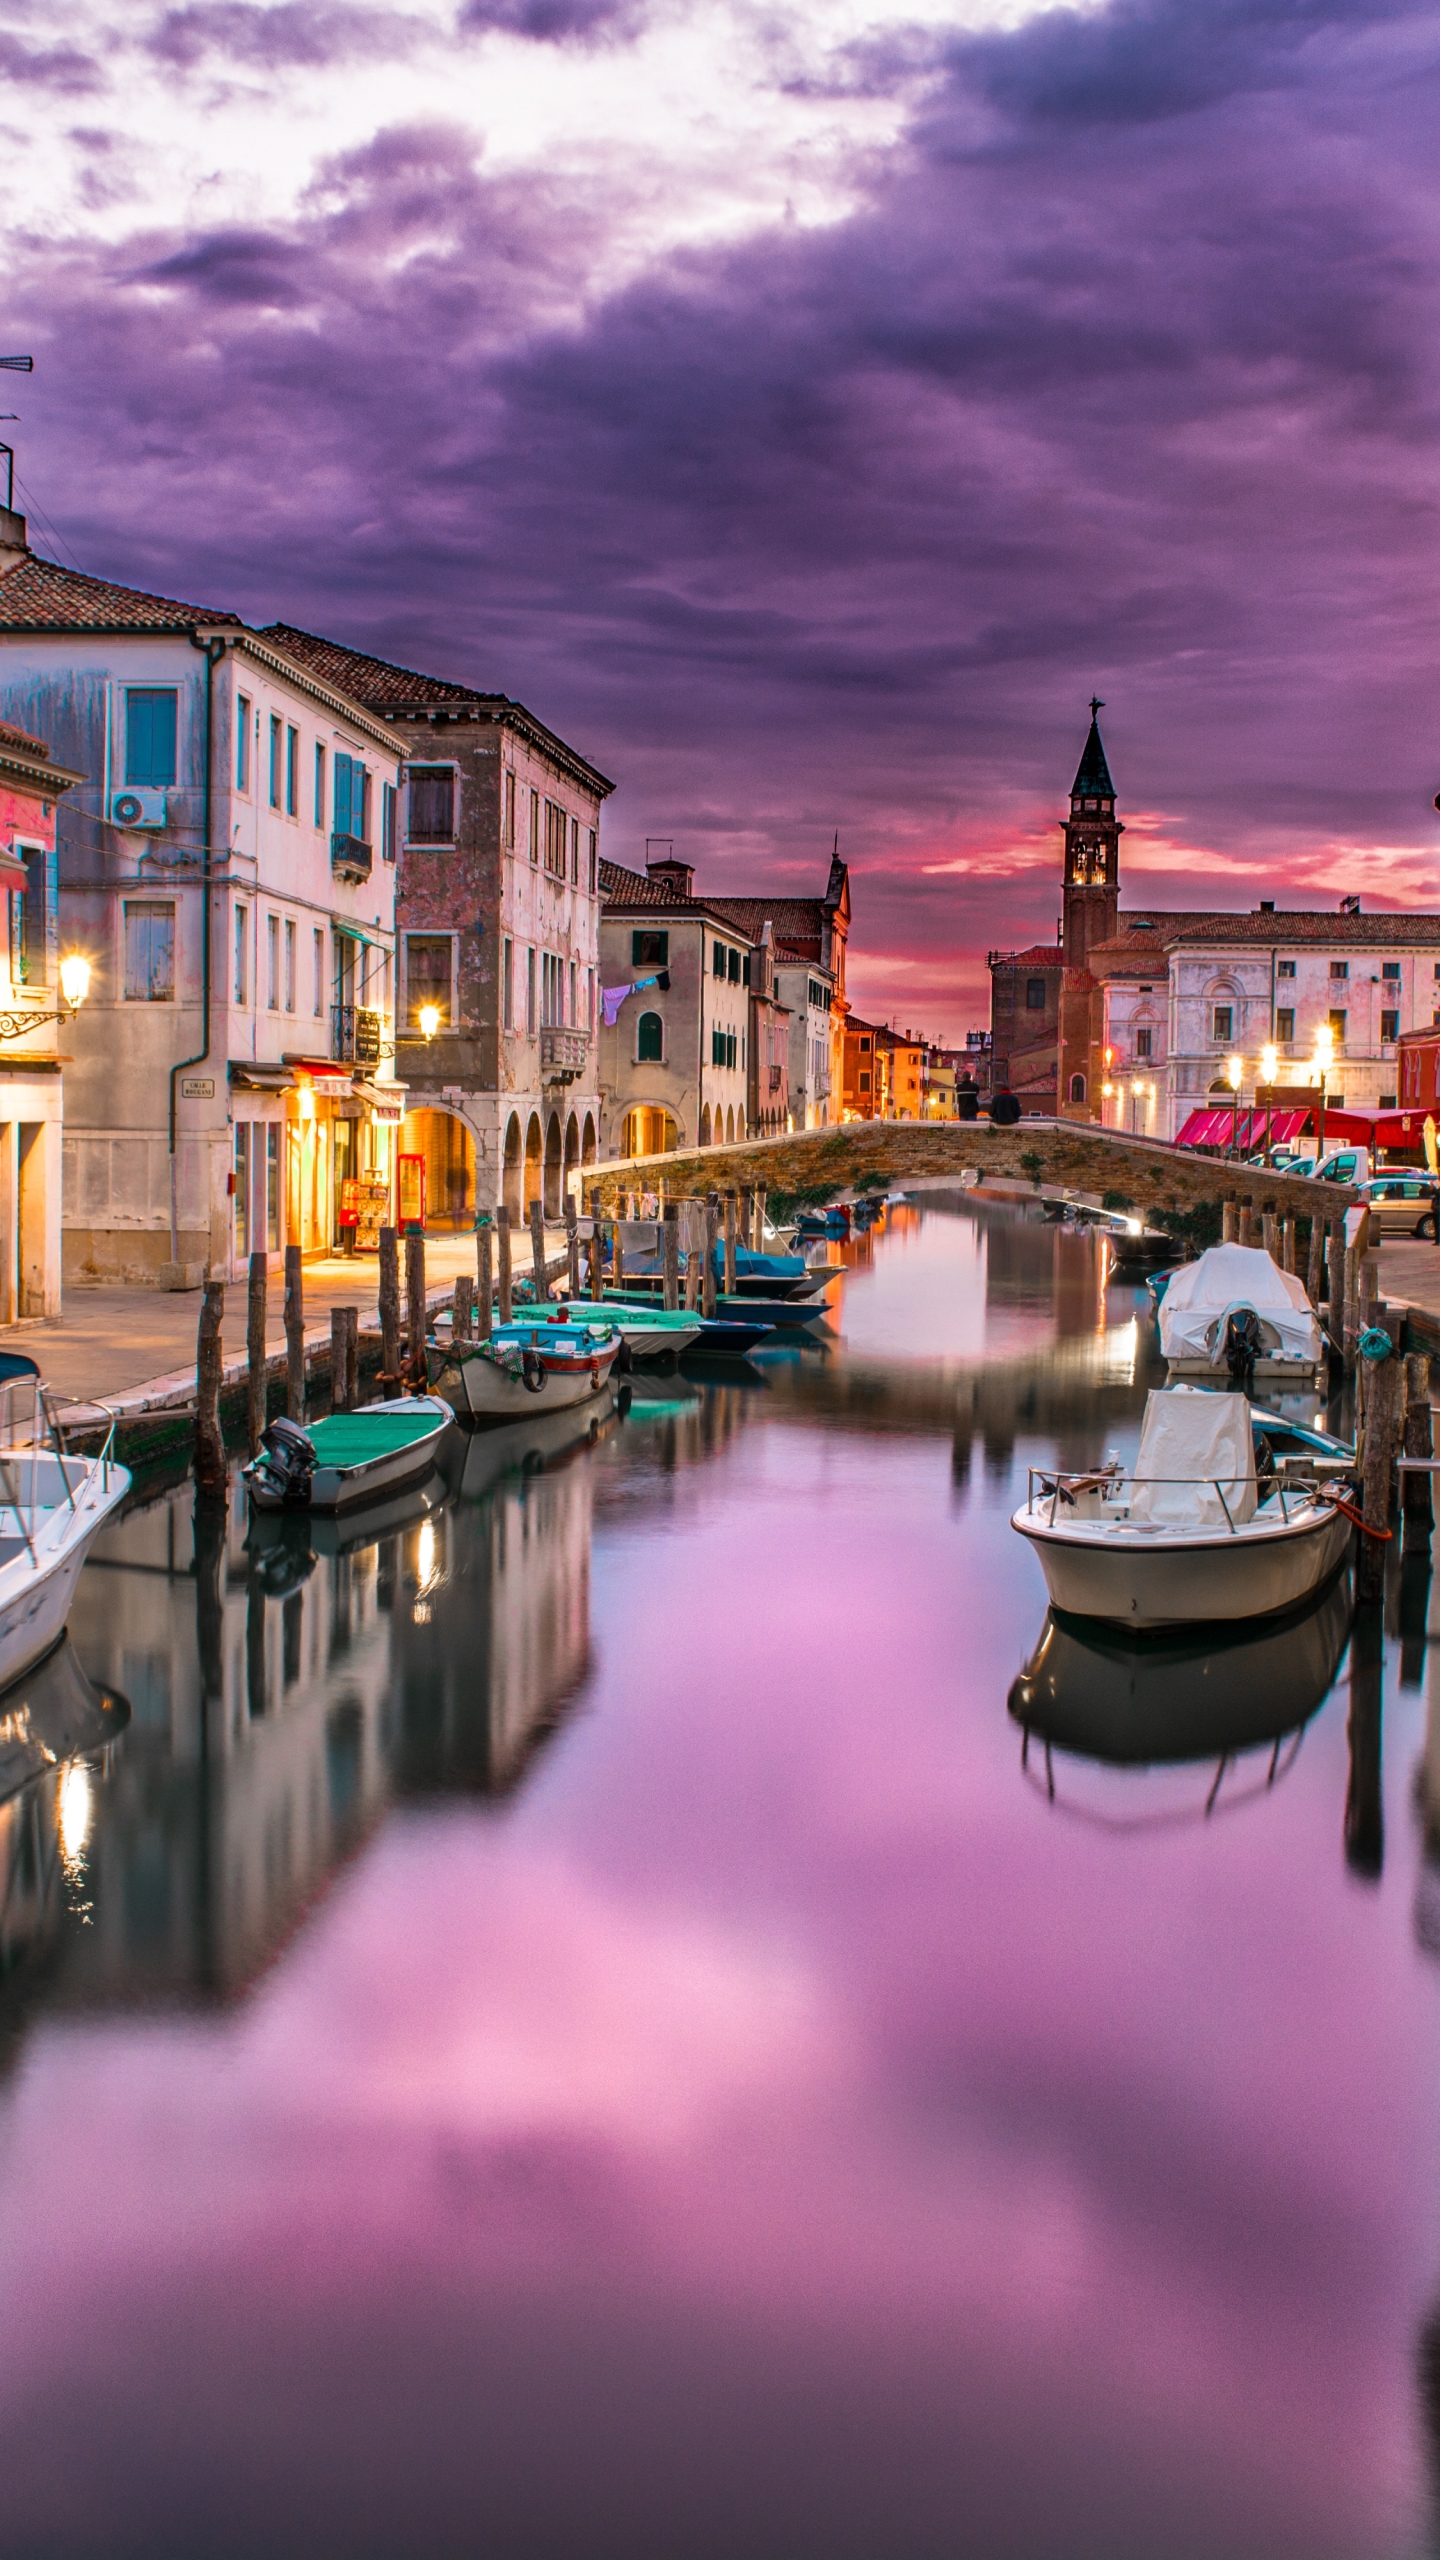 Handy-Wallpaper Städte, Venedig, Haus, Boot, Kanal, Sonnenuntergang, Menschengemacht, Spiegelung, Betrachtung kostenlos herunterladen.